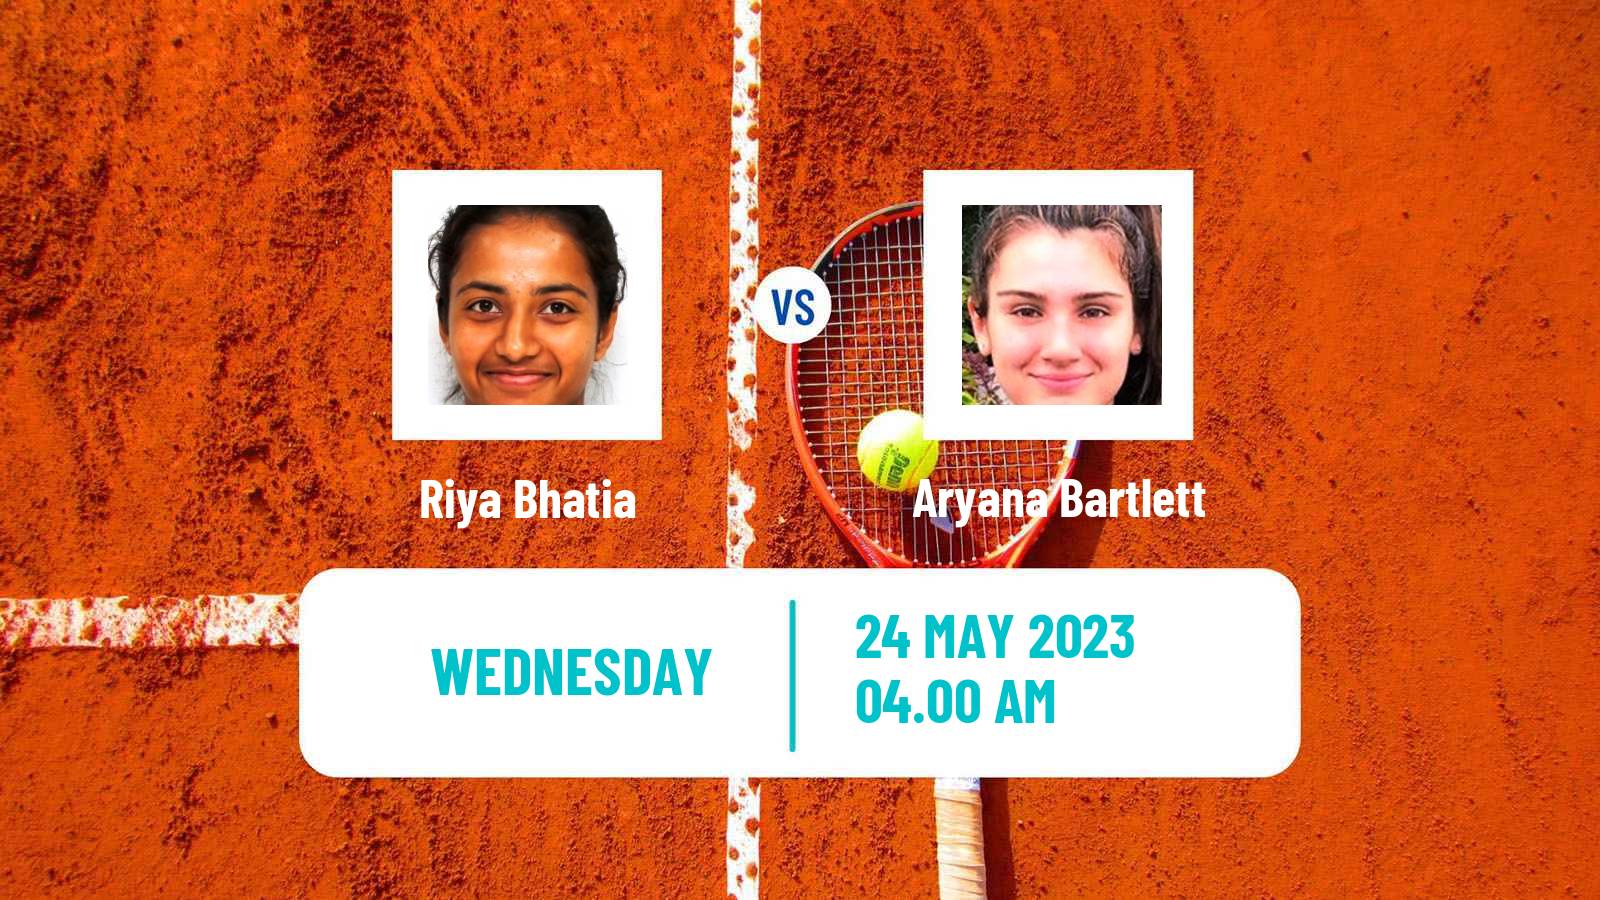 Tennis ITF W15 Malaga Women Riya Bhatia - Aryana Bartlett